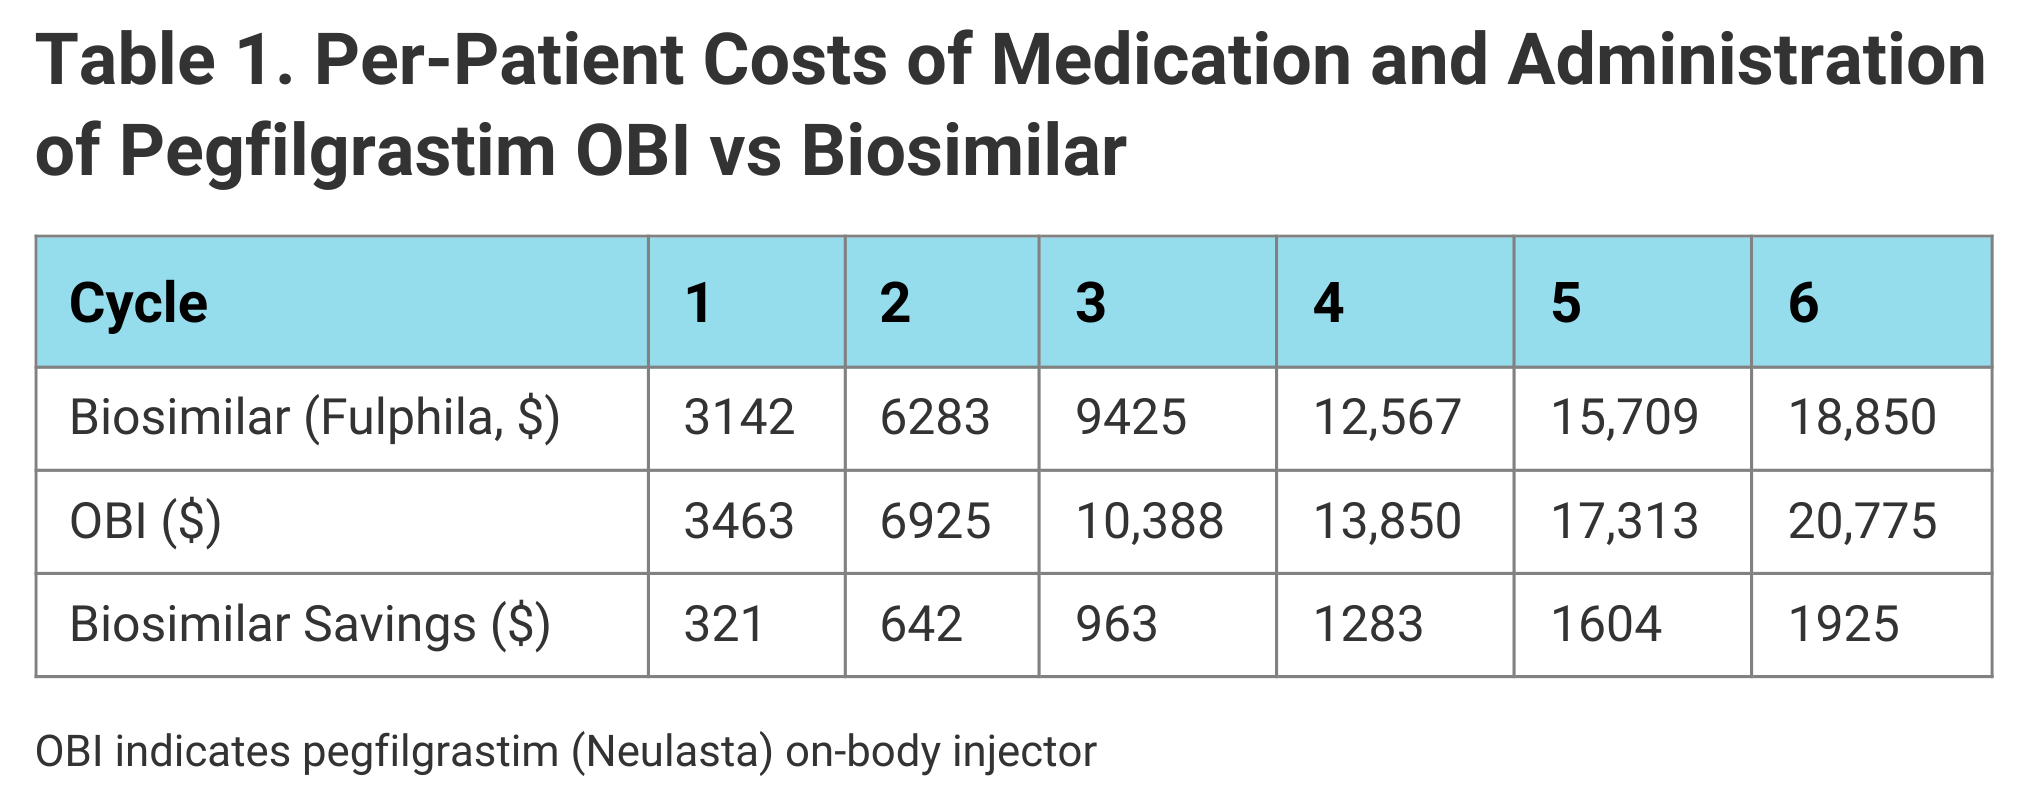 Table 1. Per-Patient Costs of Medication and Administration of Pegfilgrastim OBI vs Biosimilar